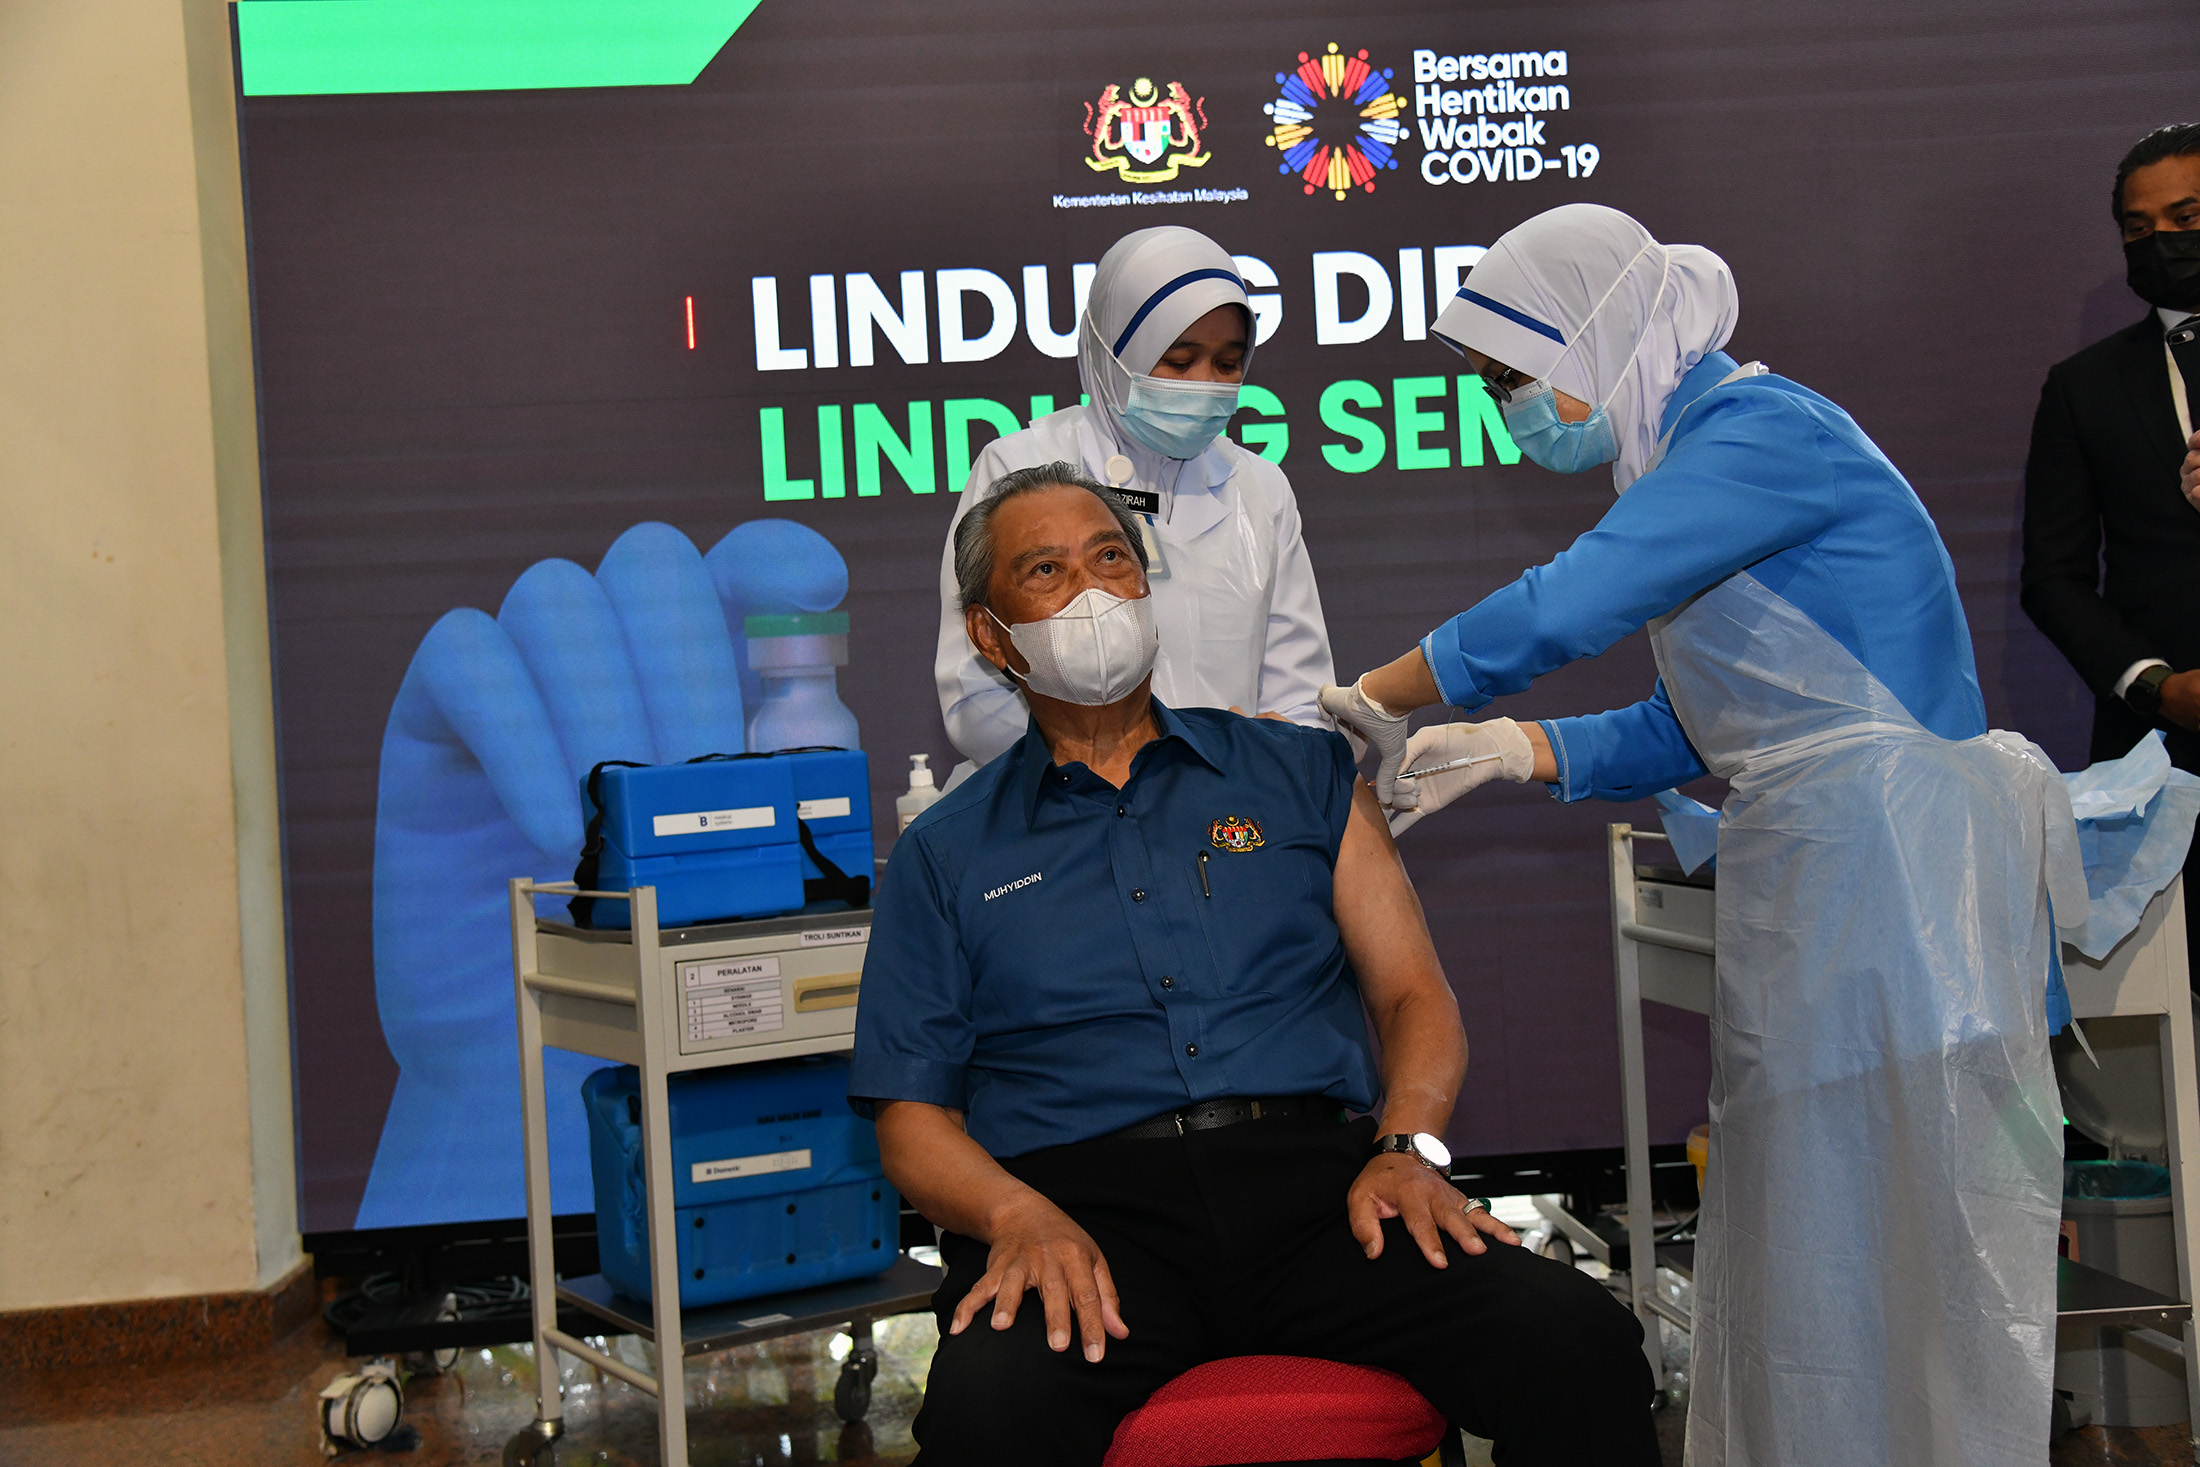 malaysia tourism vaccine